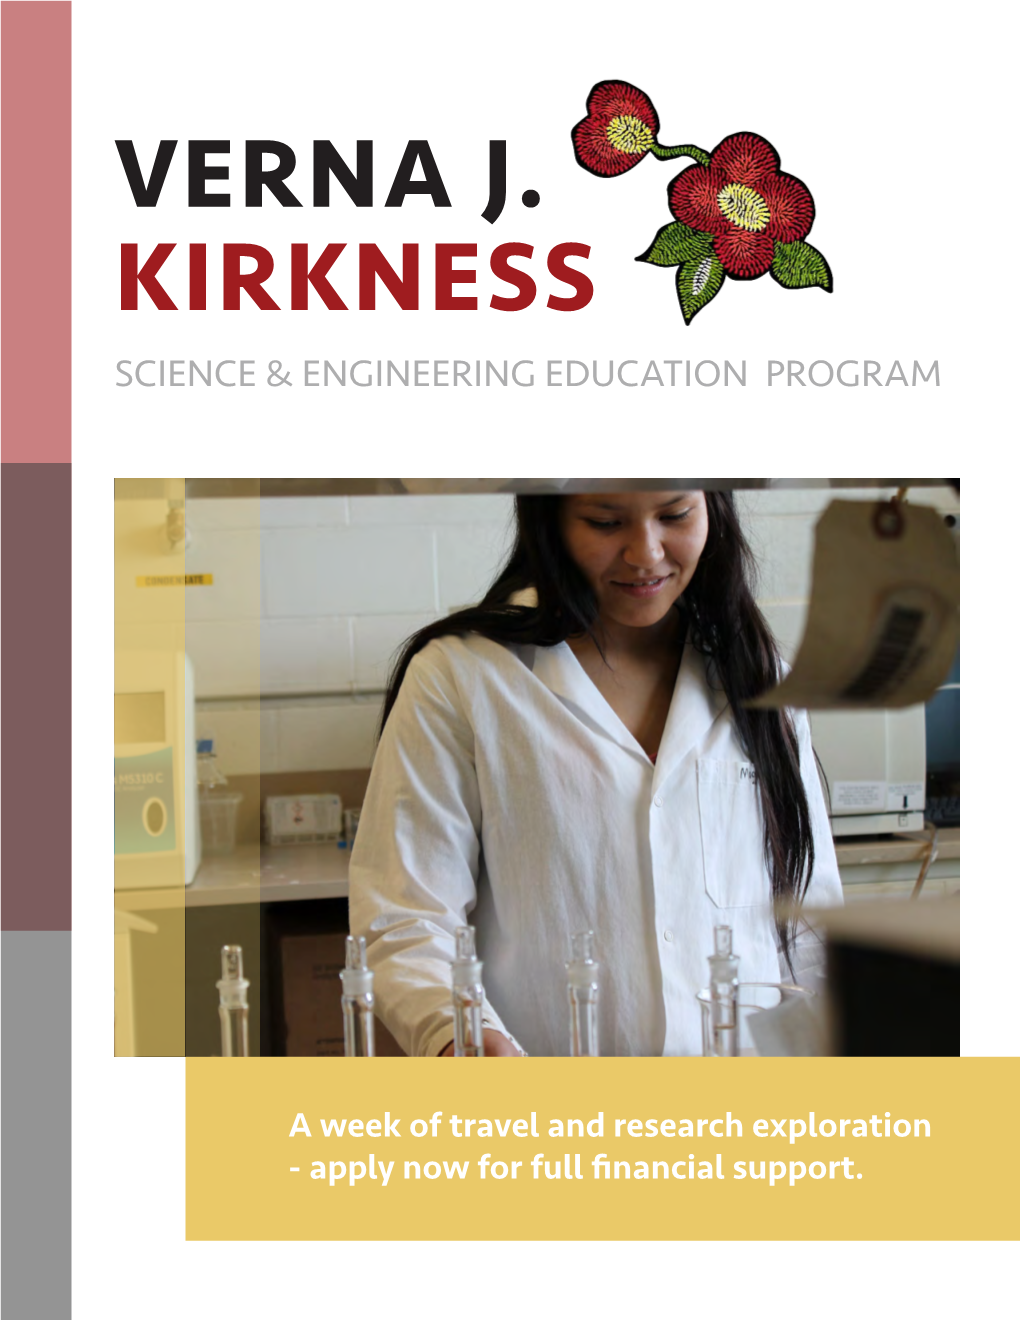 Verna J. Kirkness Science & Engineering Education Program